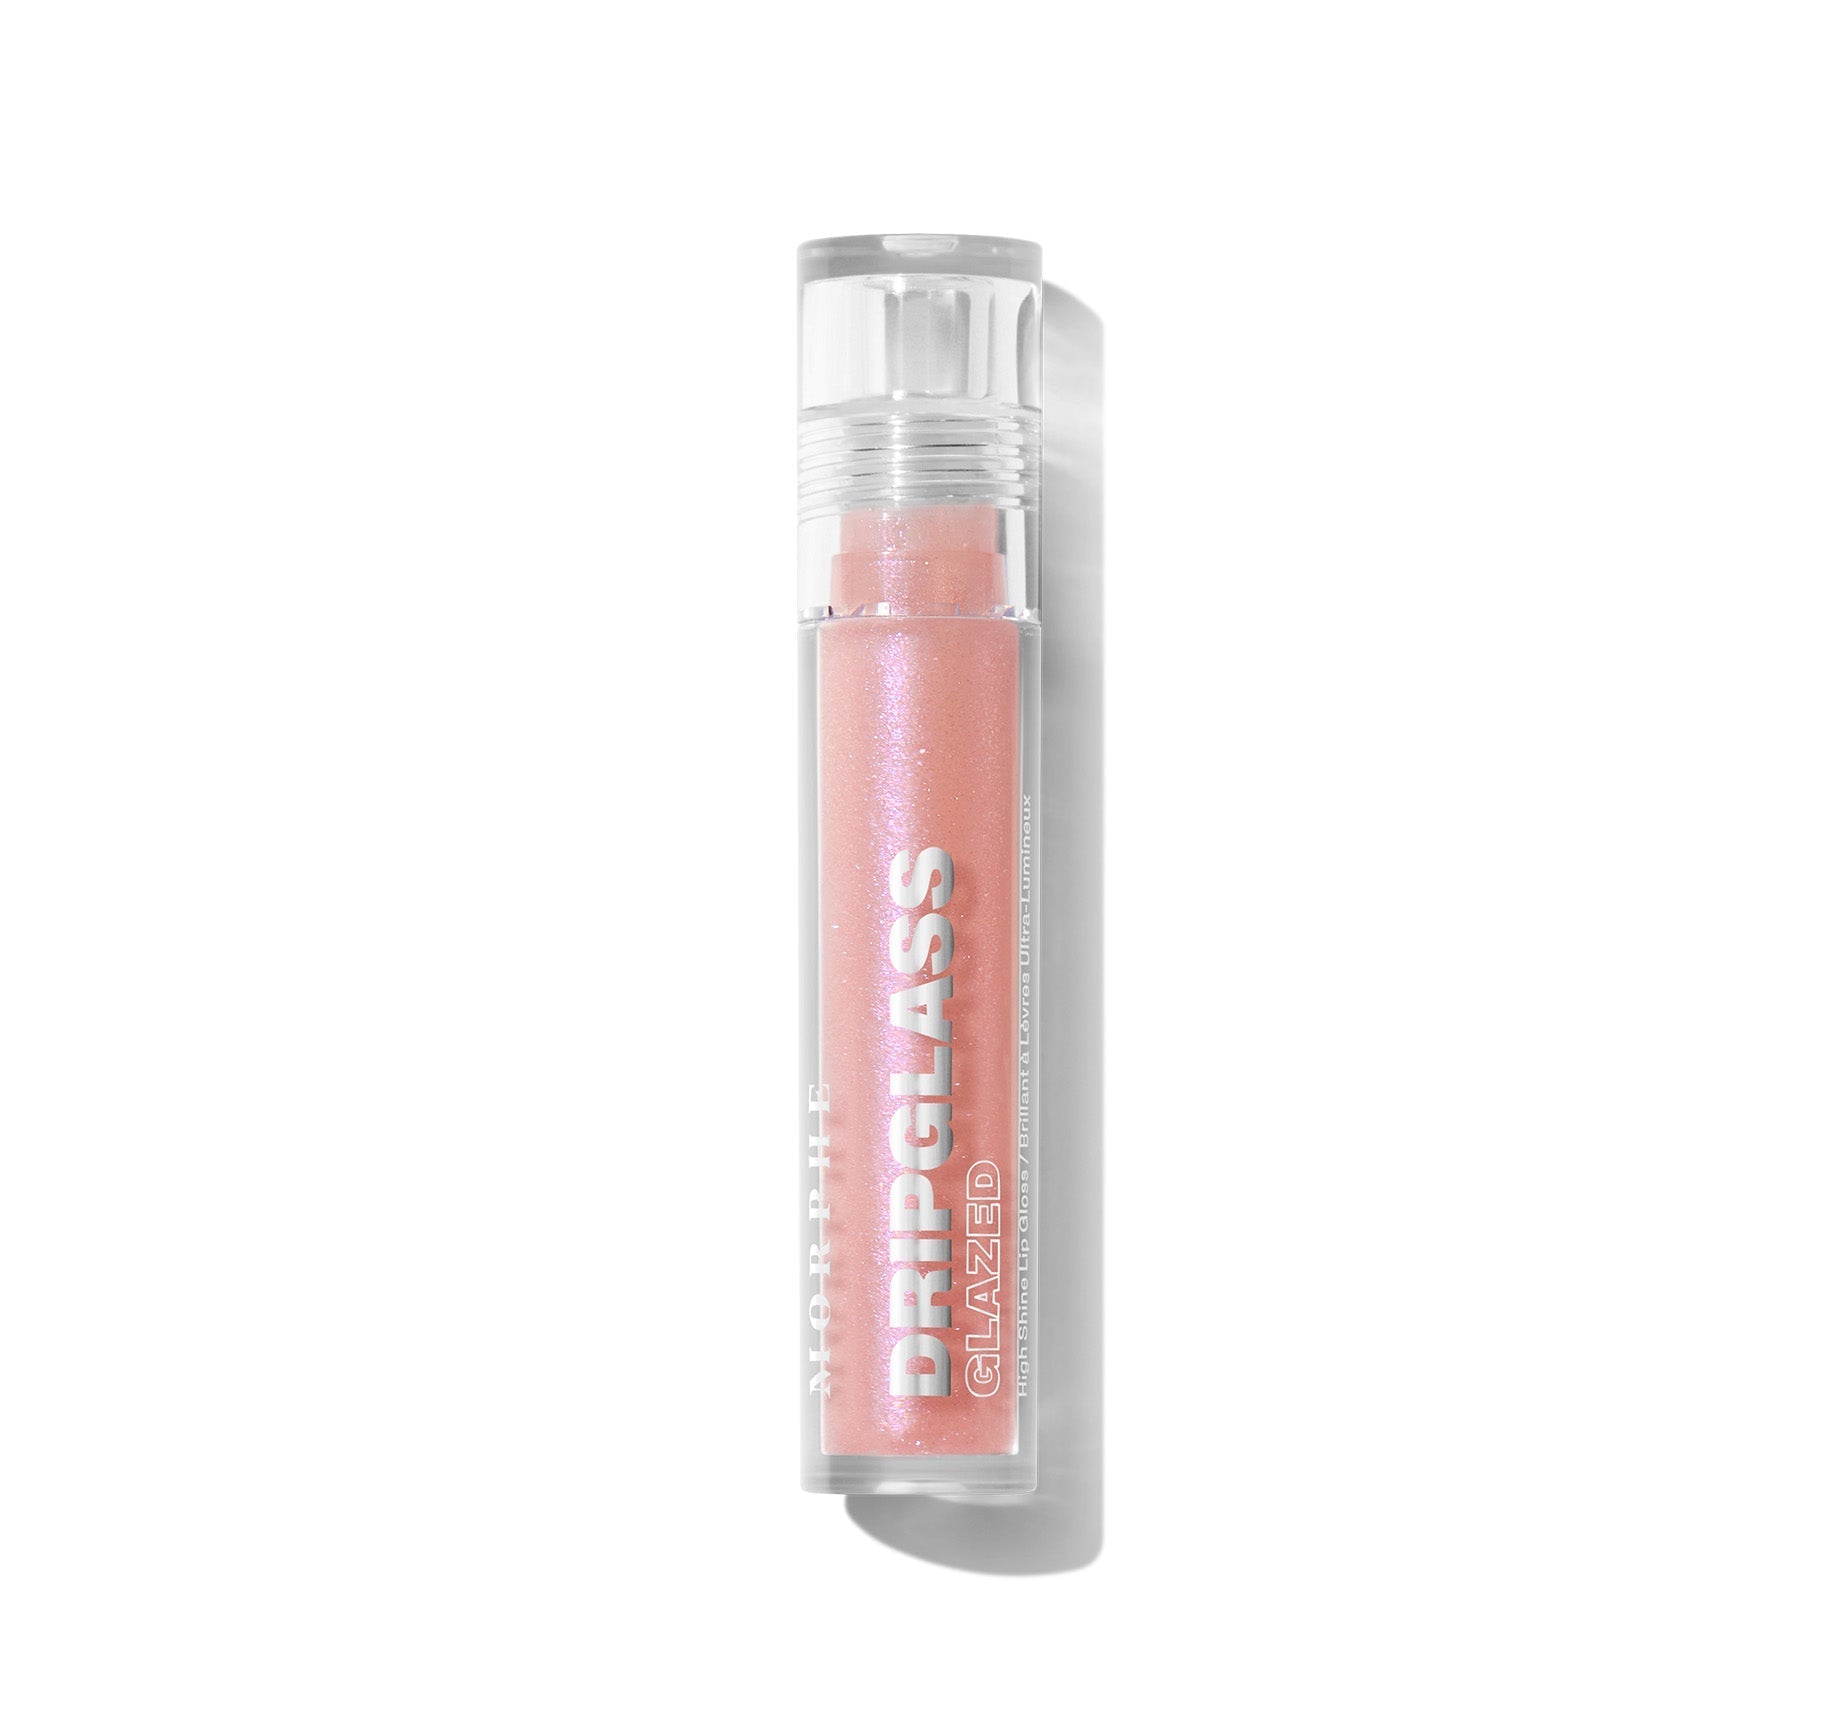 Aurascape Dripglass Glazed Highshine Pearlized Lip Gloss - Frose Bliss - Image 3